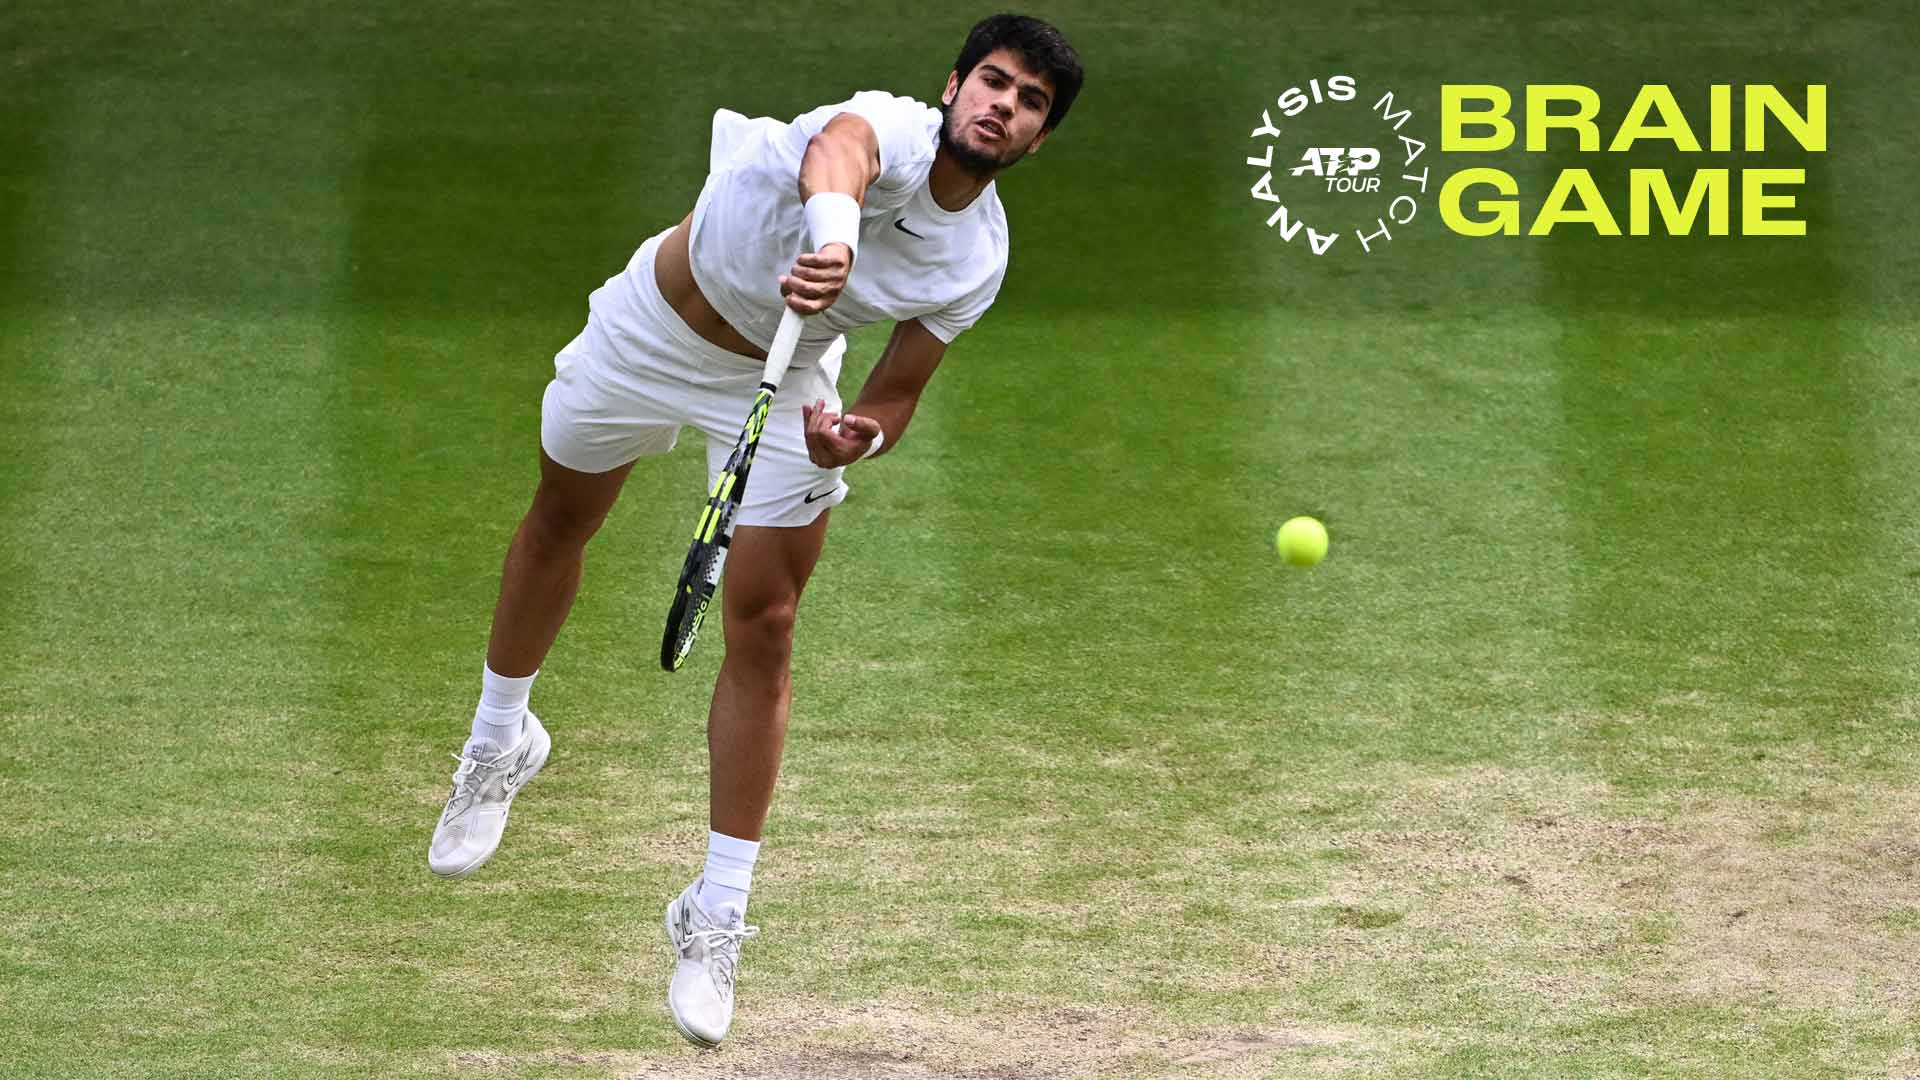 Alcaraz: 'Estou animado para enfrentar Djokovic' - Tenis News